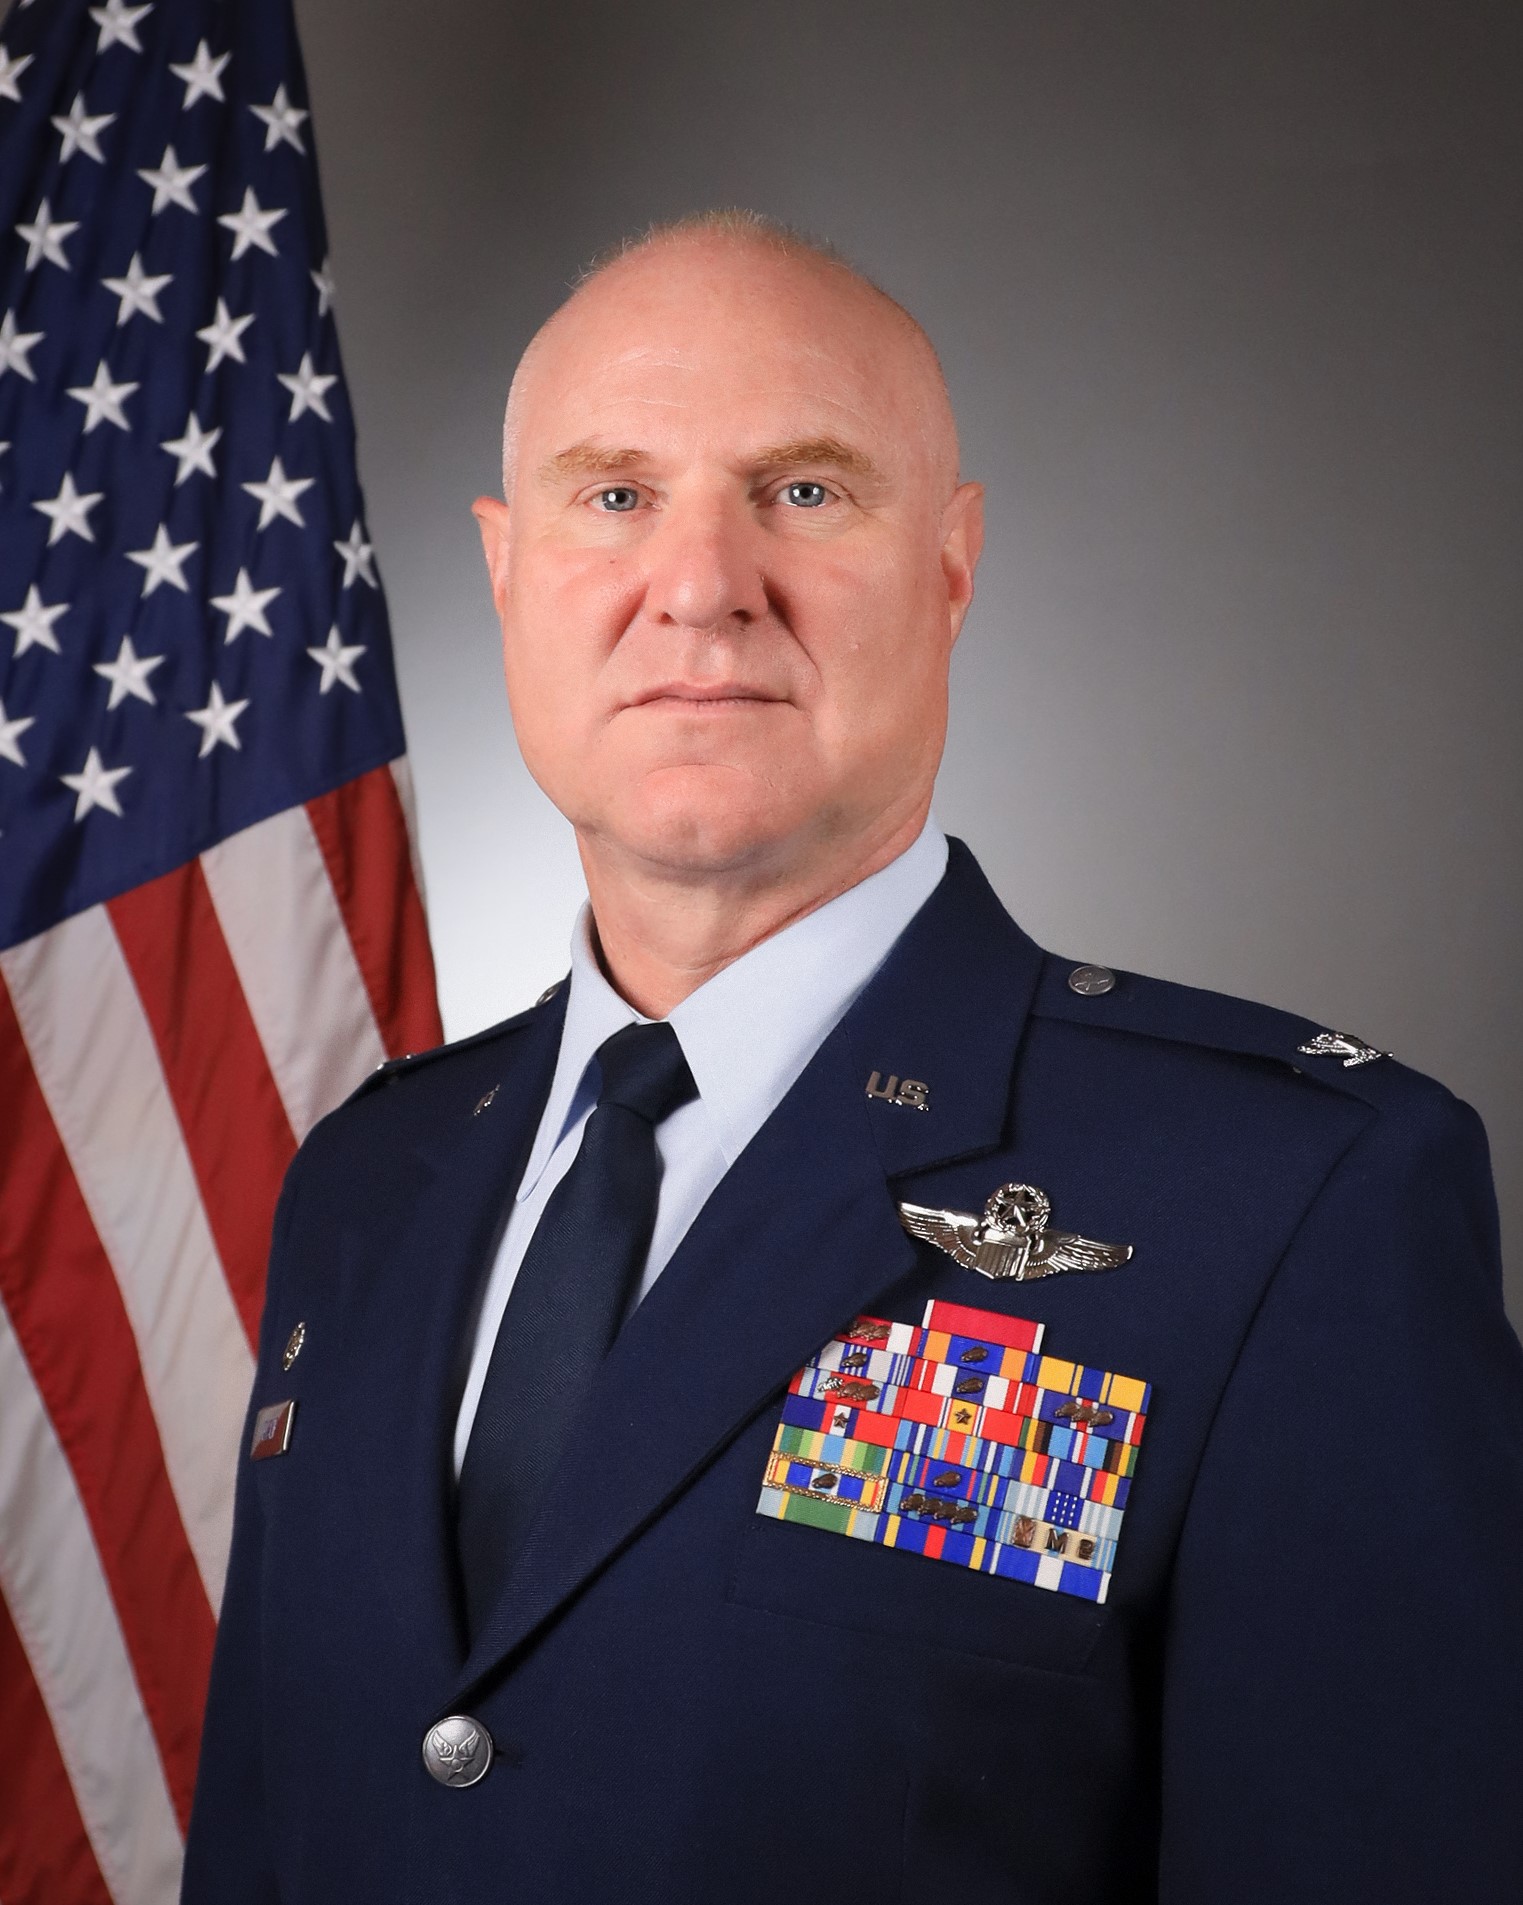 Col. Richard M. Heaslip's official photo